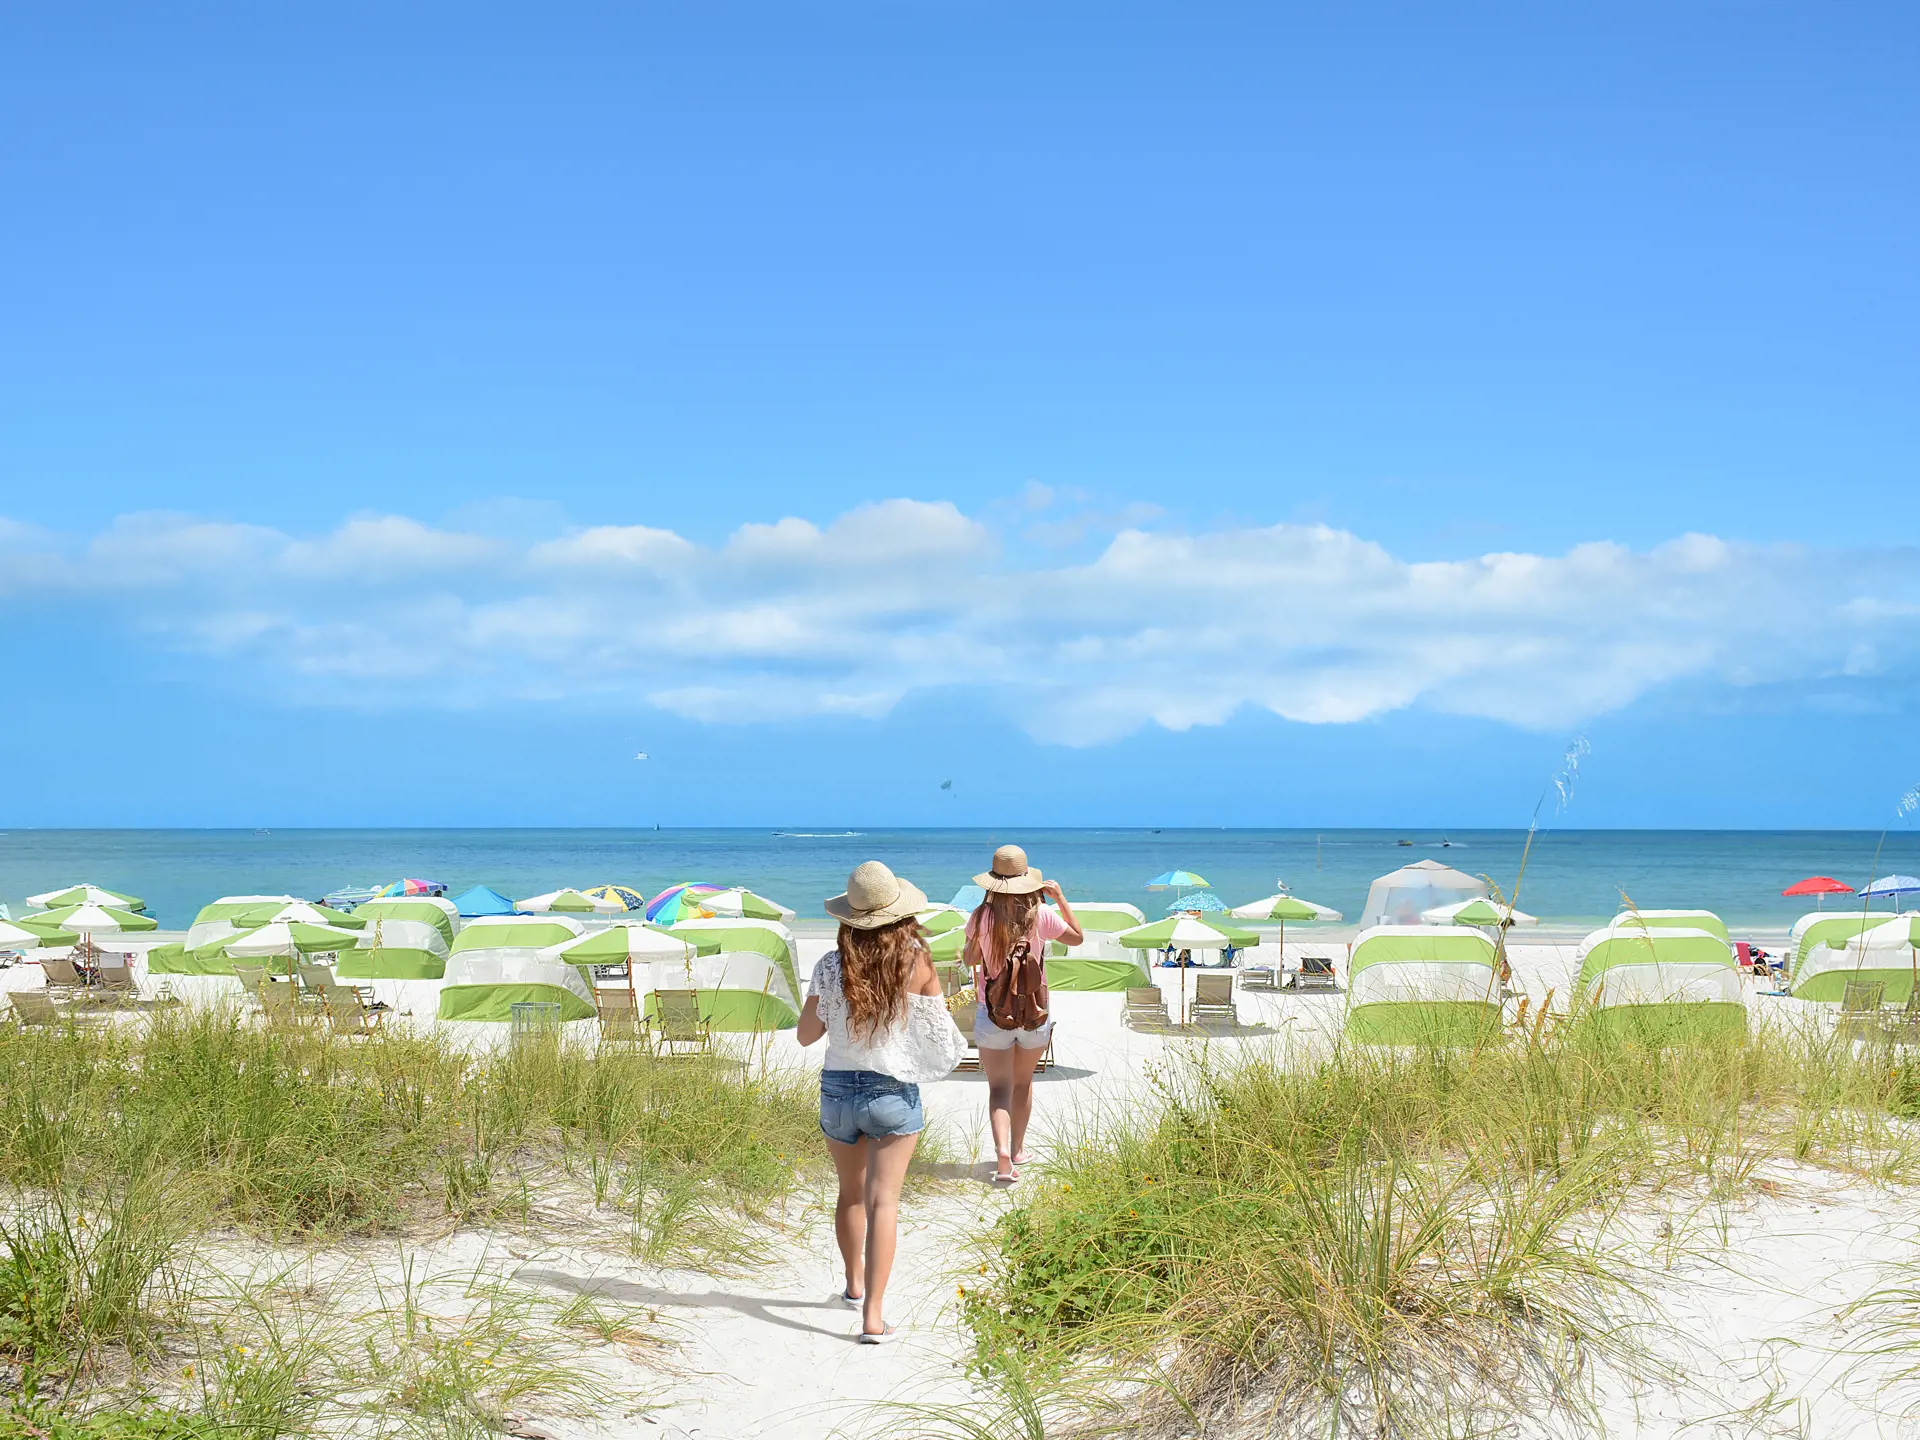 To piger på vej på stranden i Clearwater Beach - shutterstock_602555957.jpg